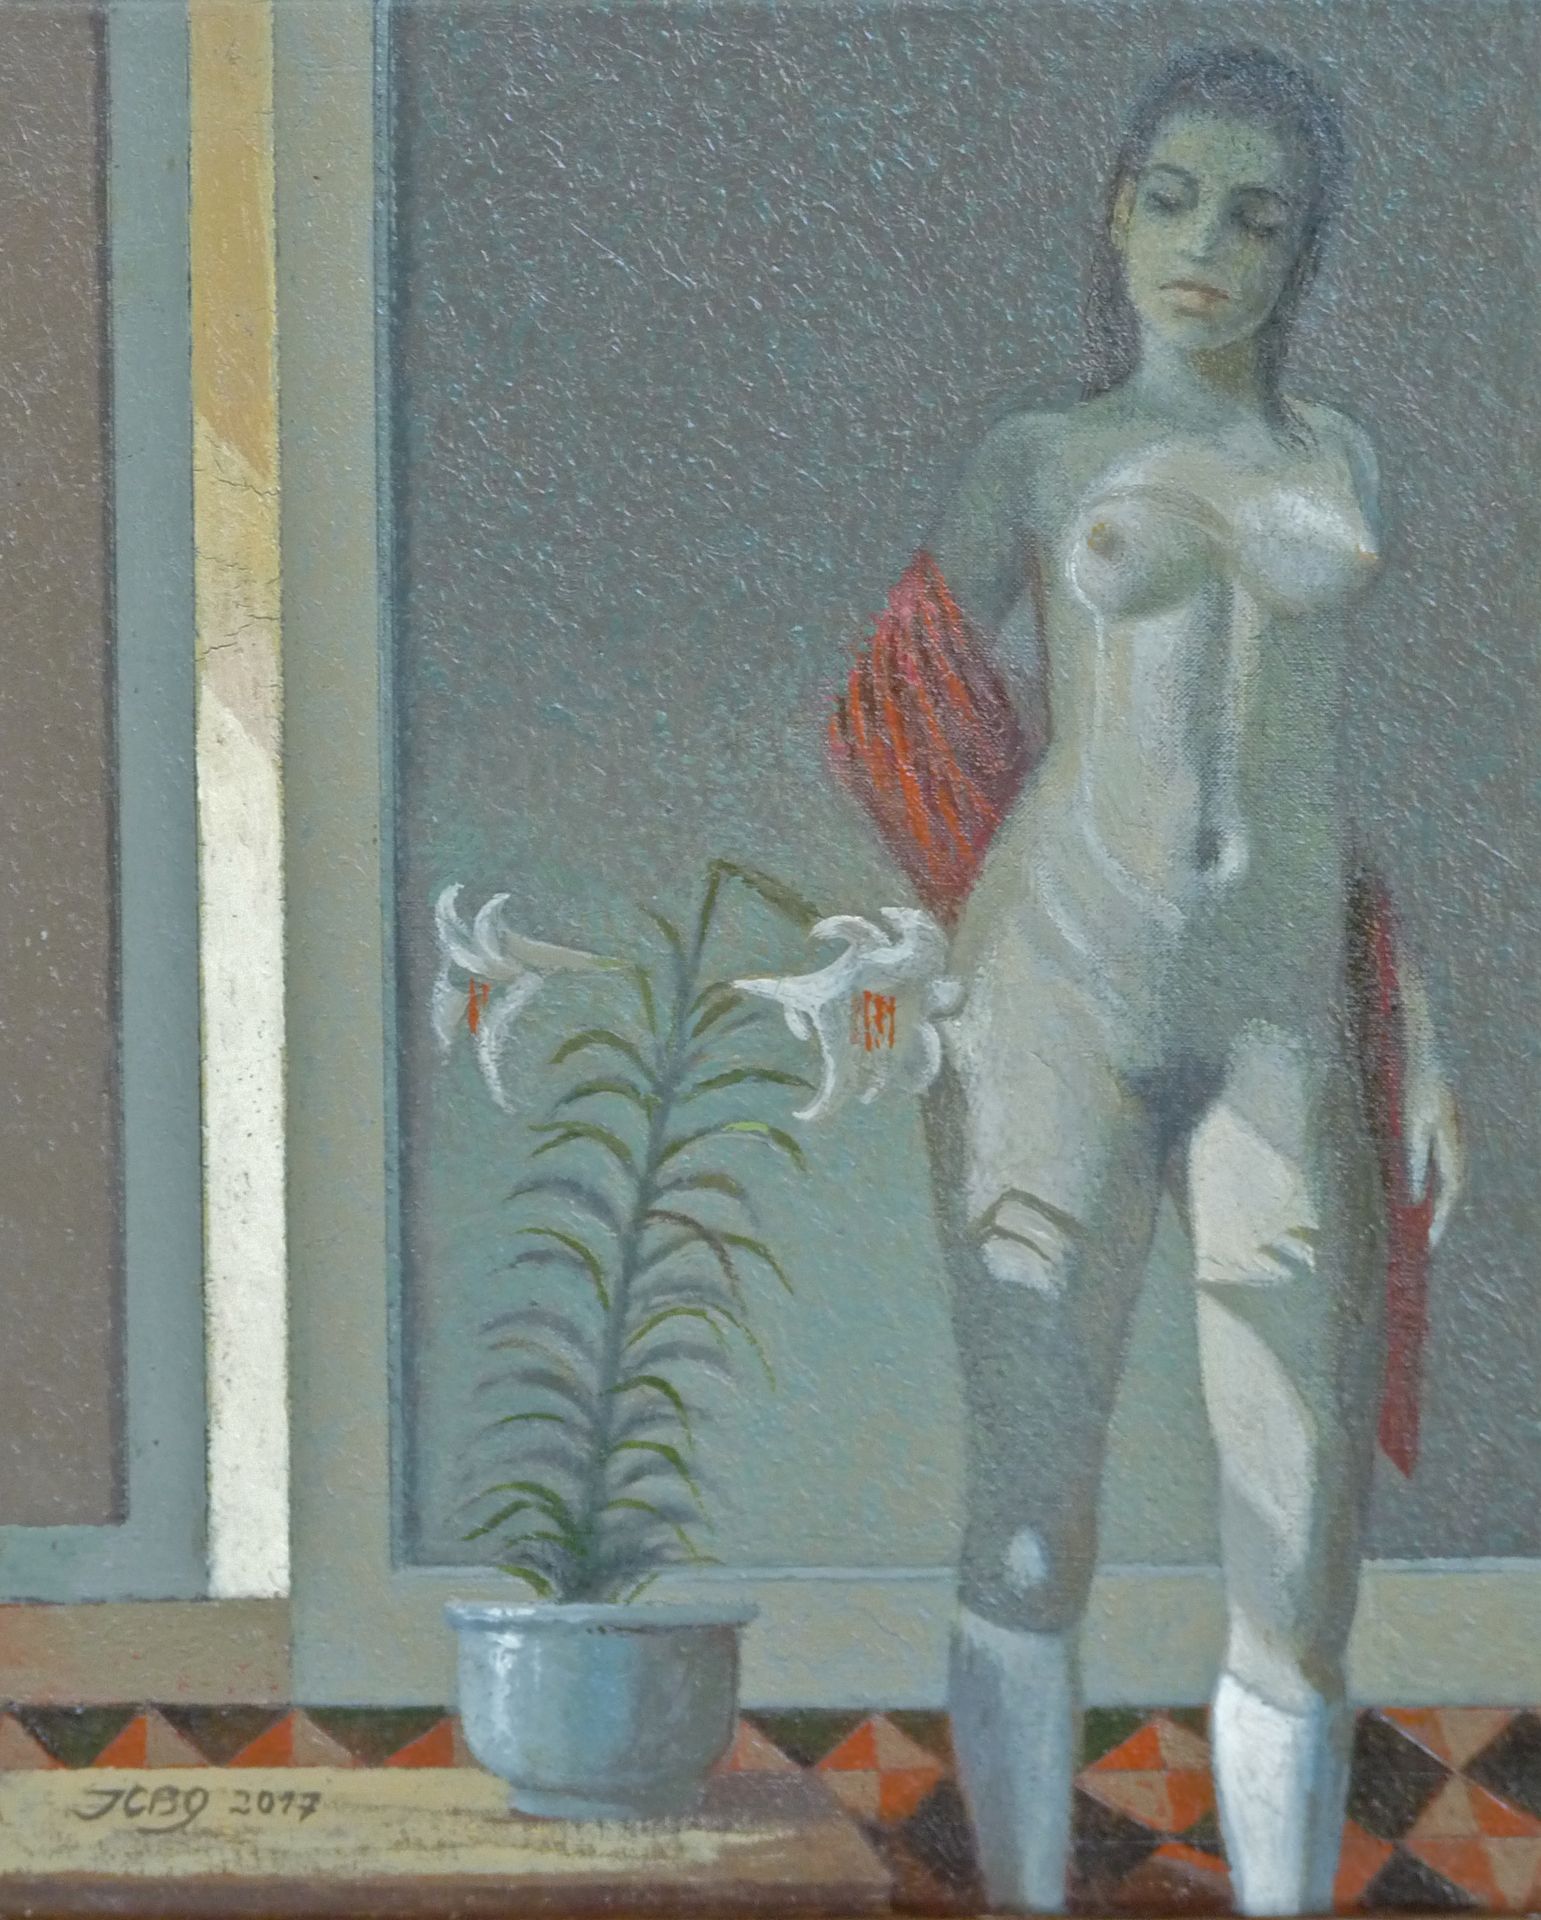 Null 让-克劳德-贝松-吉拉尔 (1938-2021)

带着百合花的女人, 2017

布面油画，左下方有图案和日期

27 x 22 cm